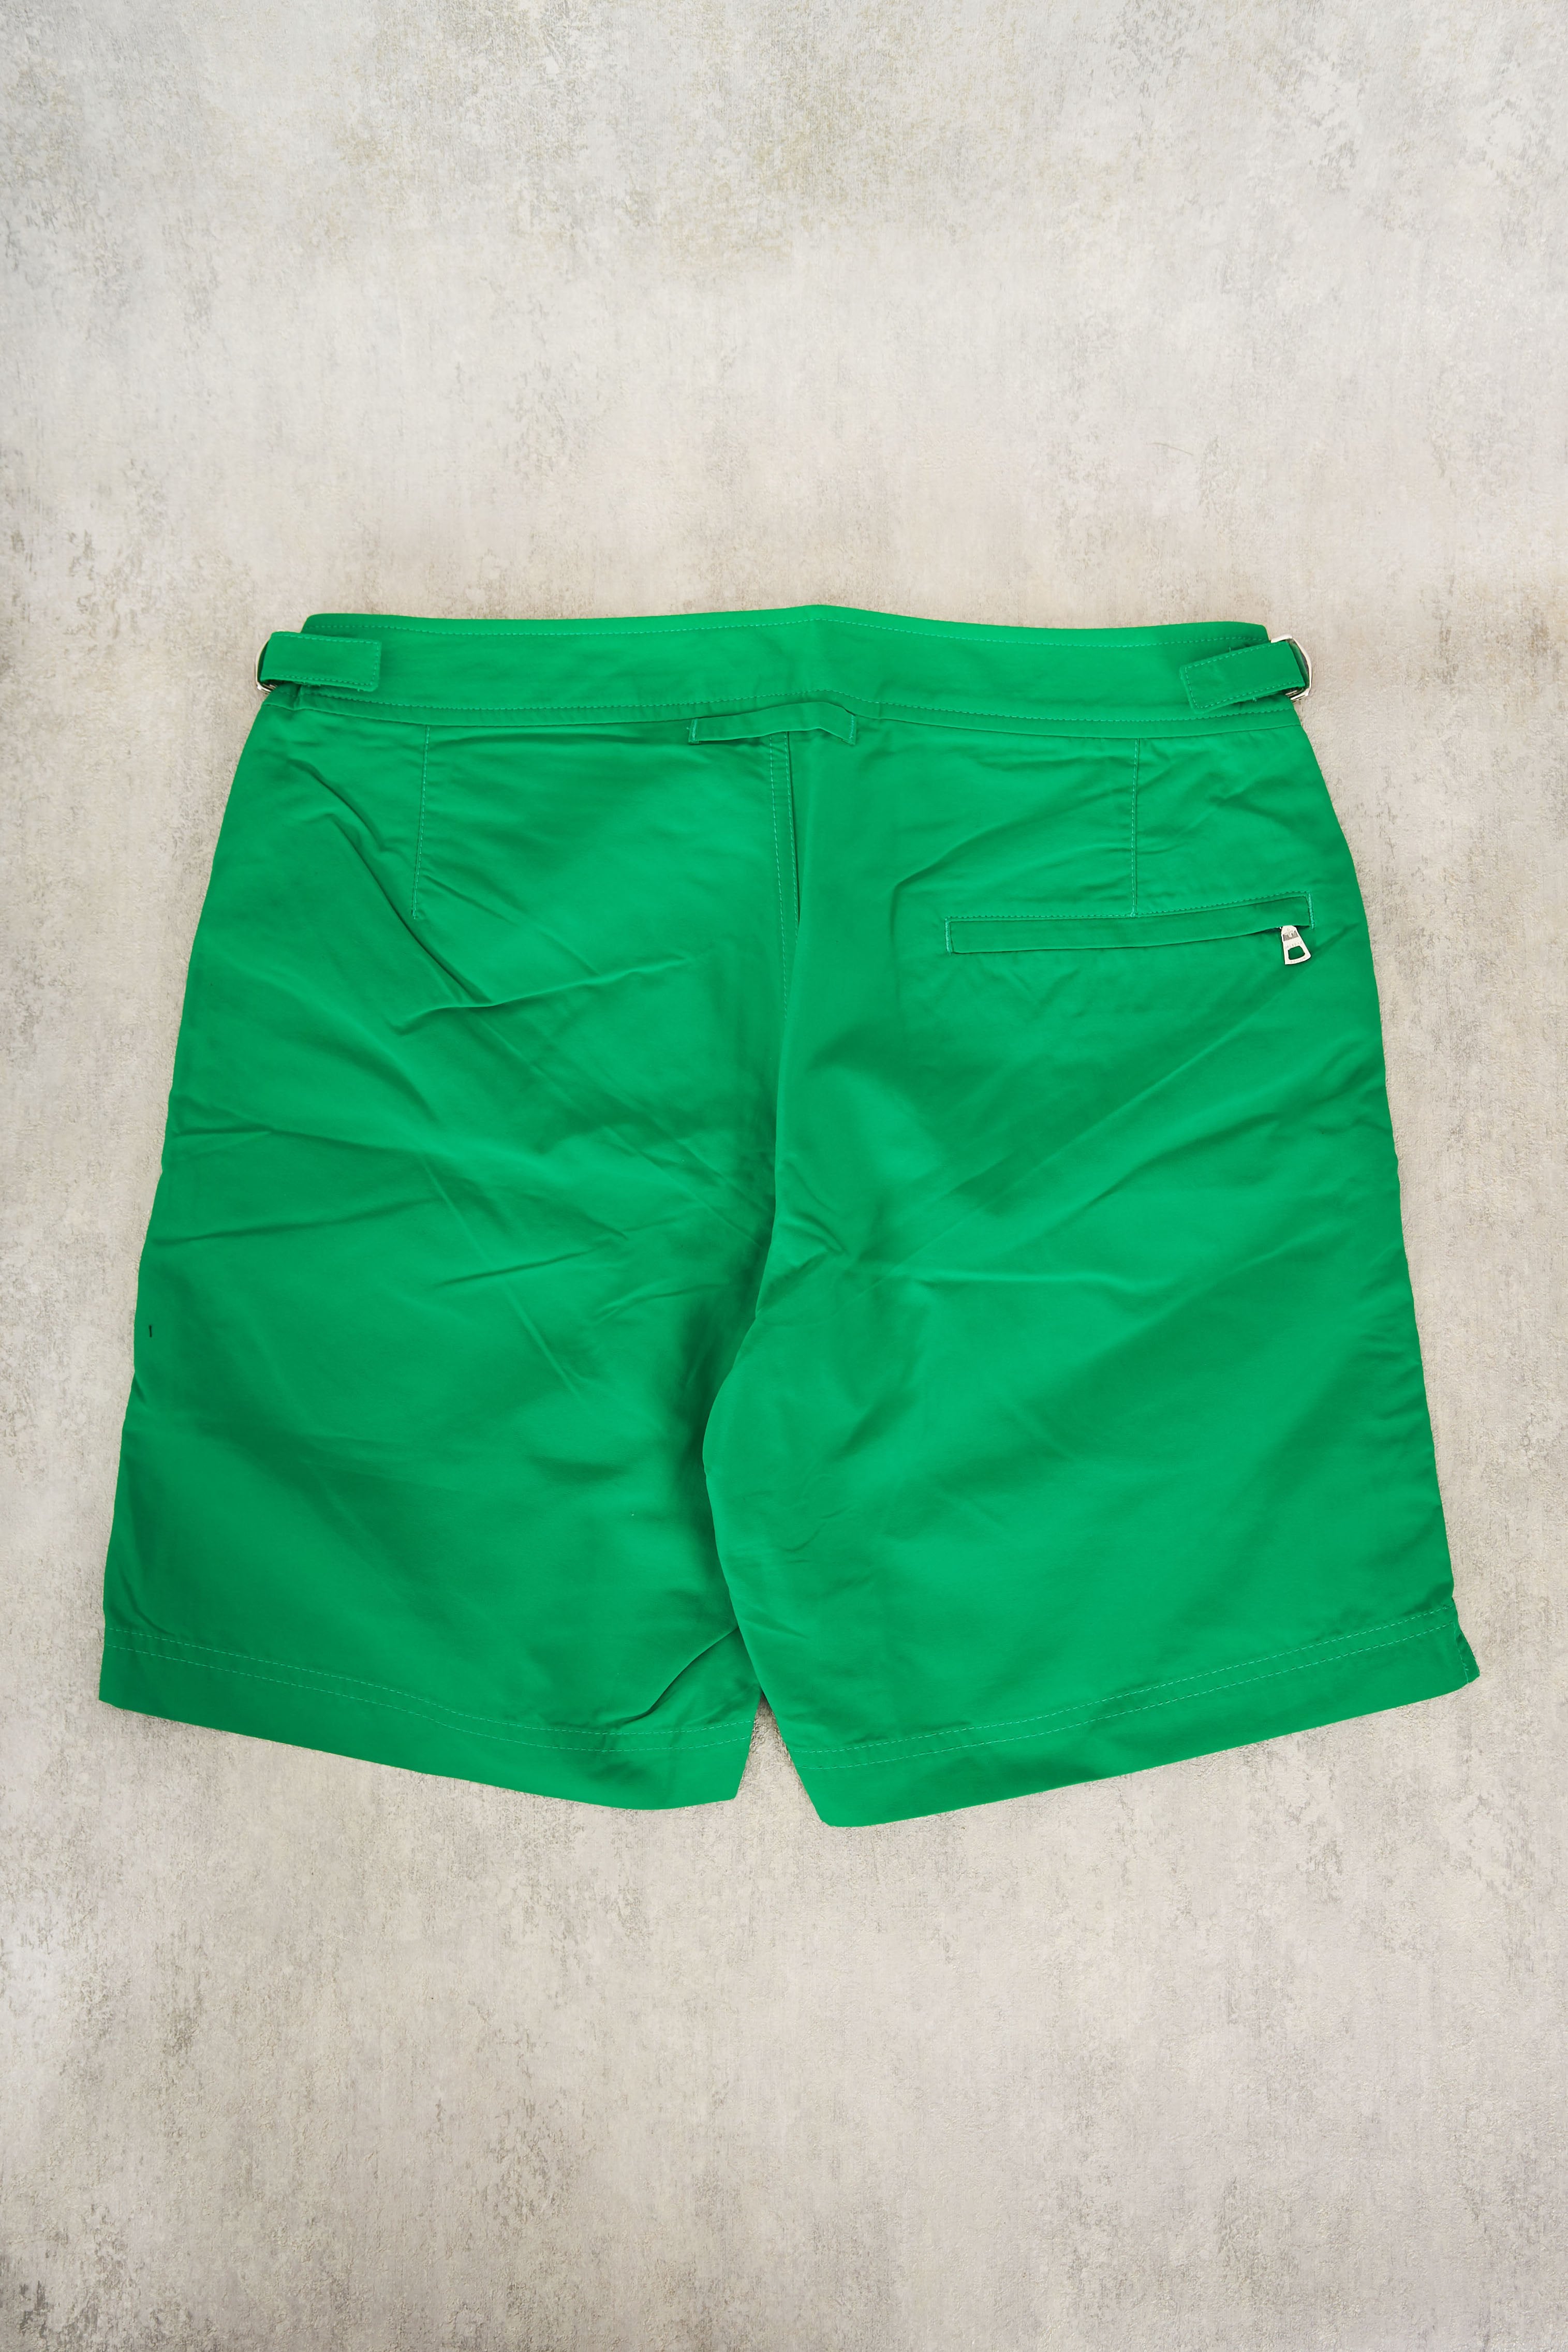 Orlebar Brown Lime Green Mid Length Amazon Swim Shorts